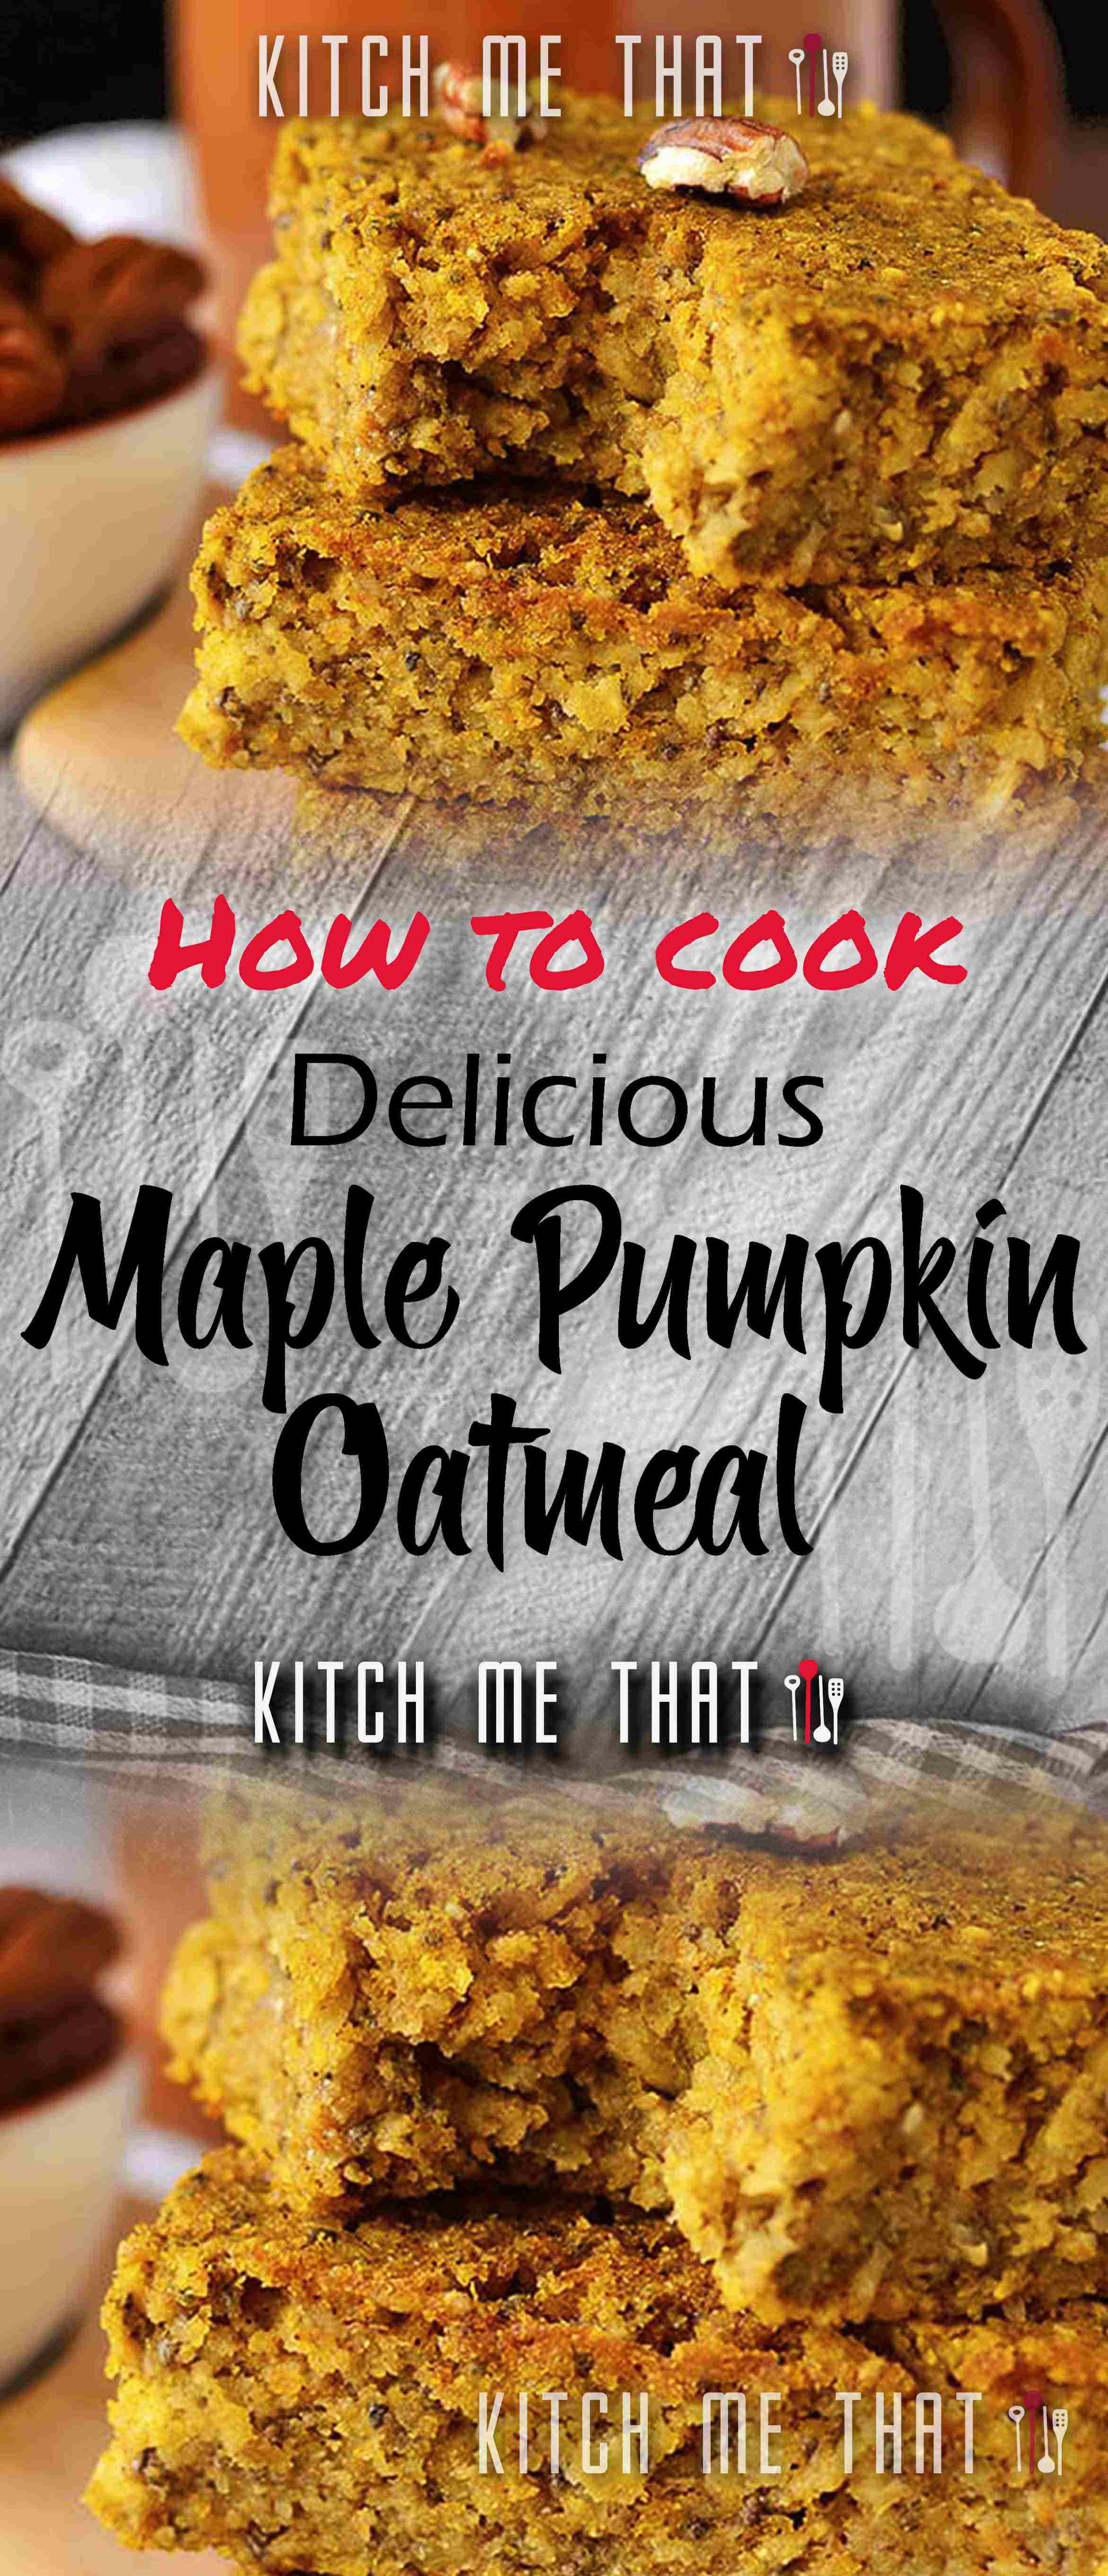 Maple Pumpkin Oatmeal